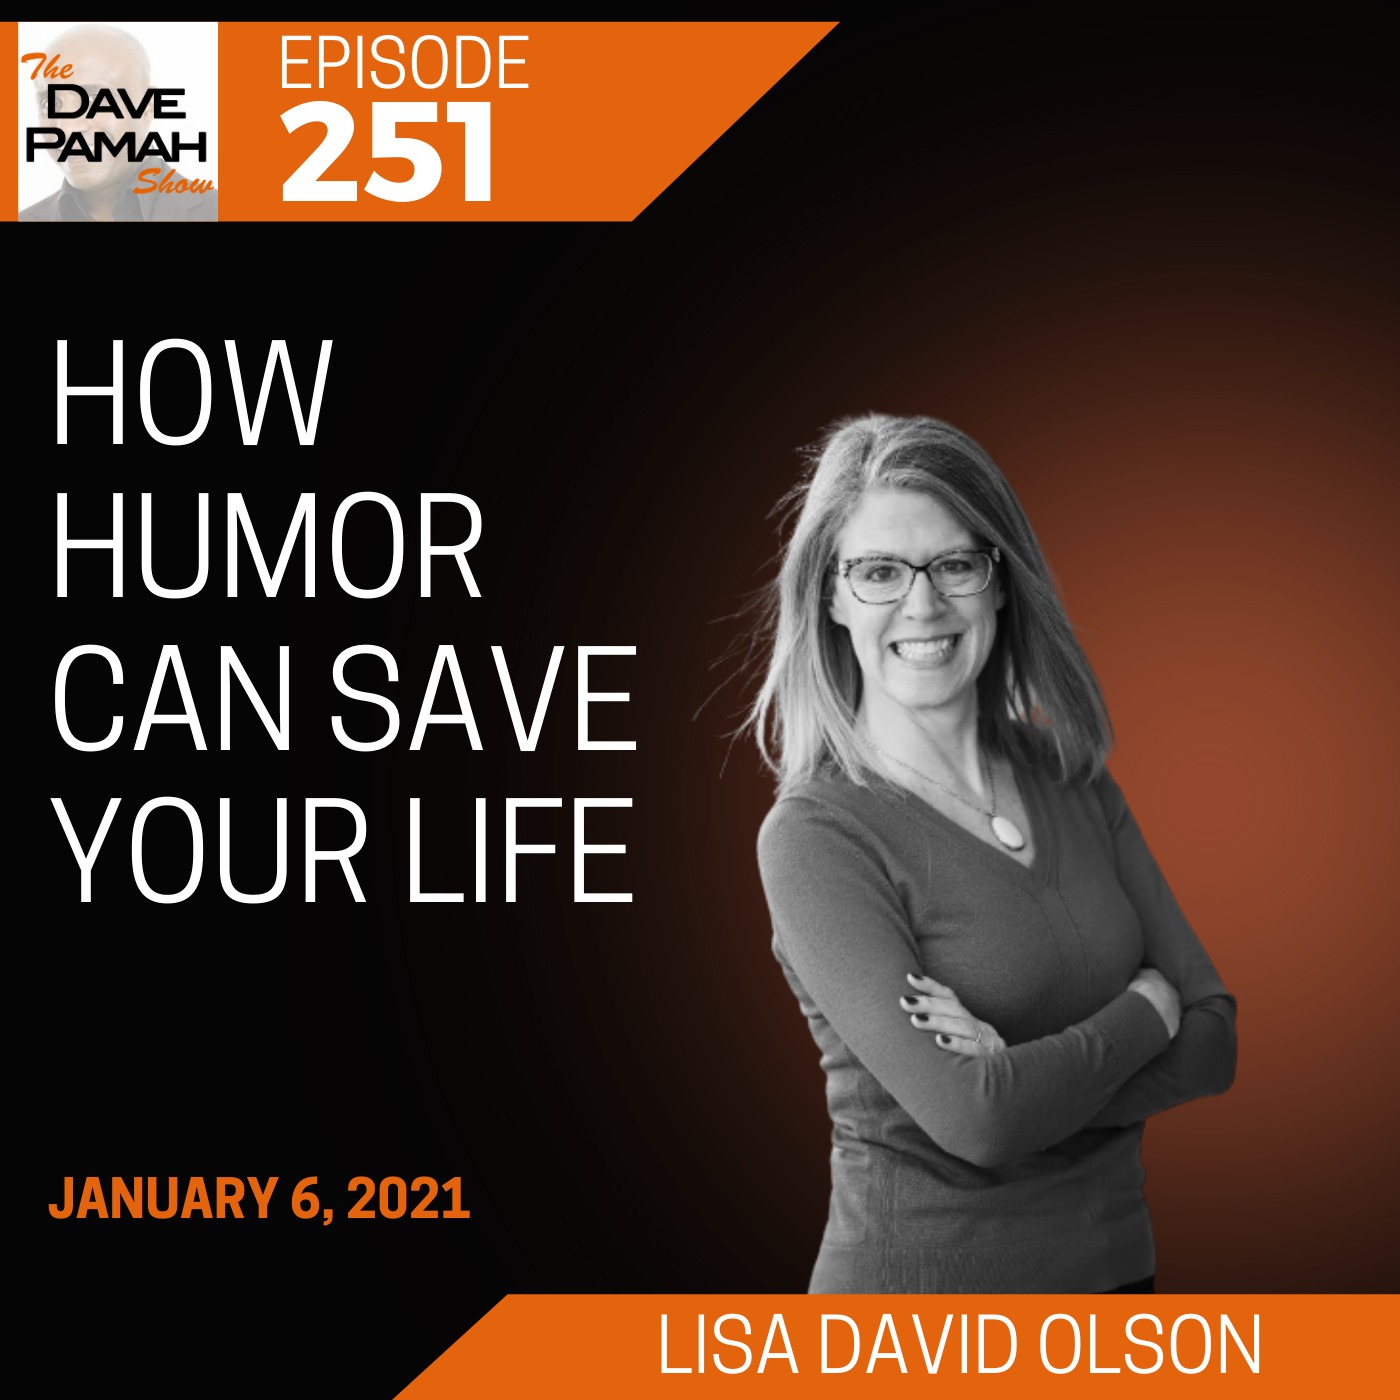 How humor can save your life with Lisa David Olson Image